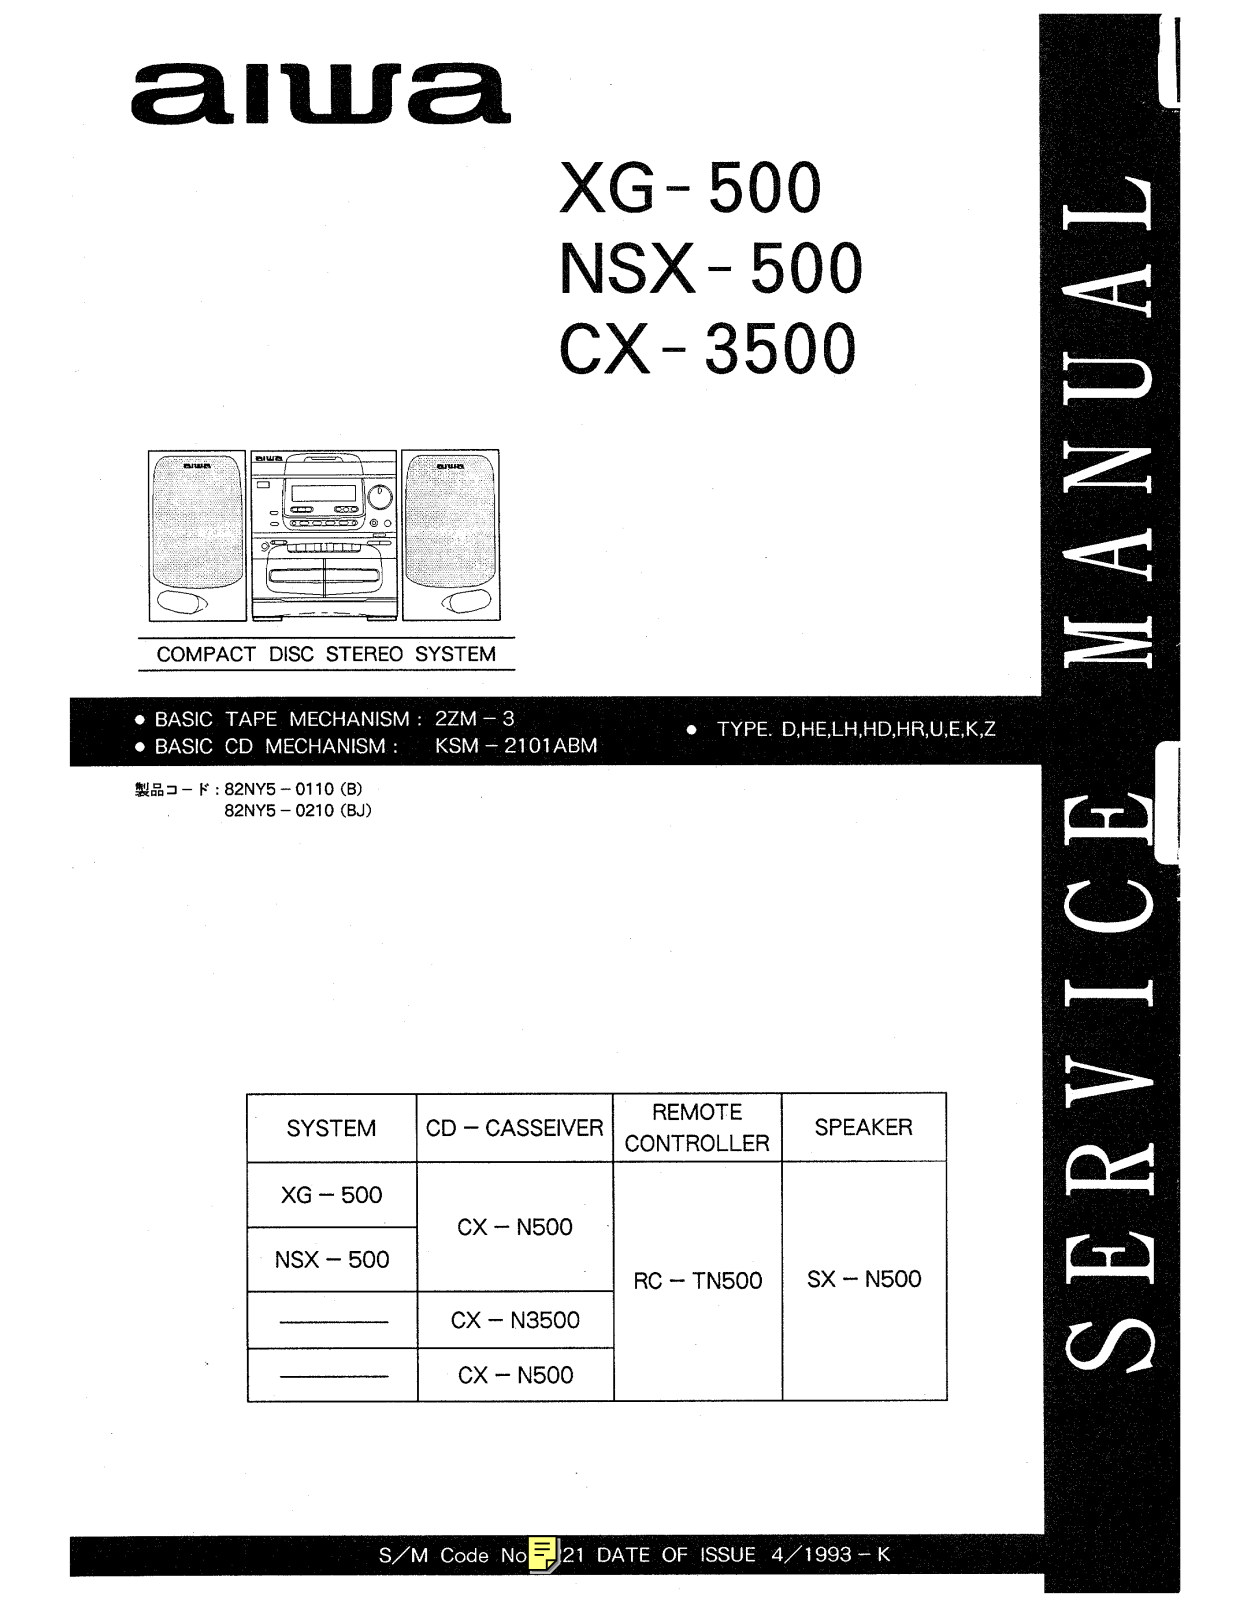 Aiwa XG-500, NSX-500, CX-3500 Service Manual